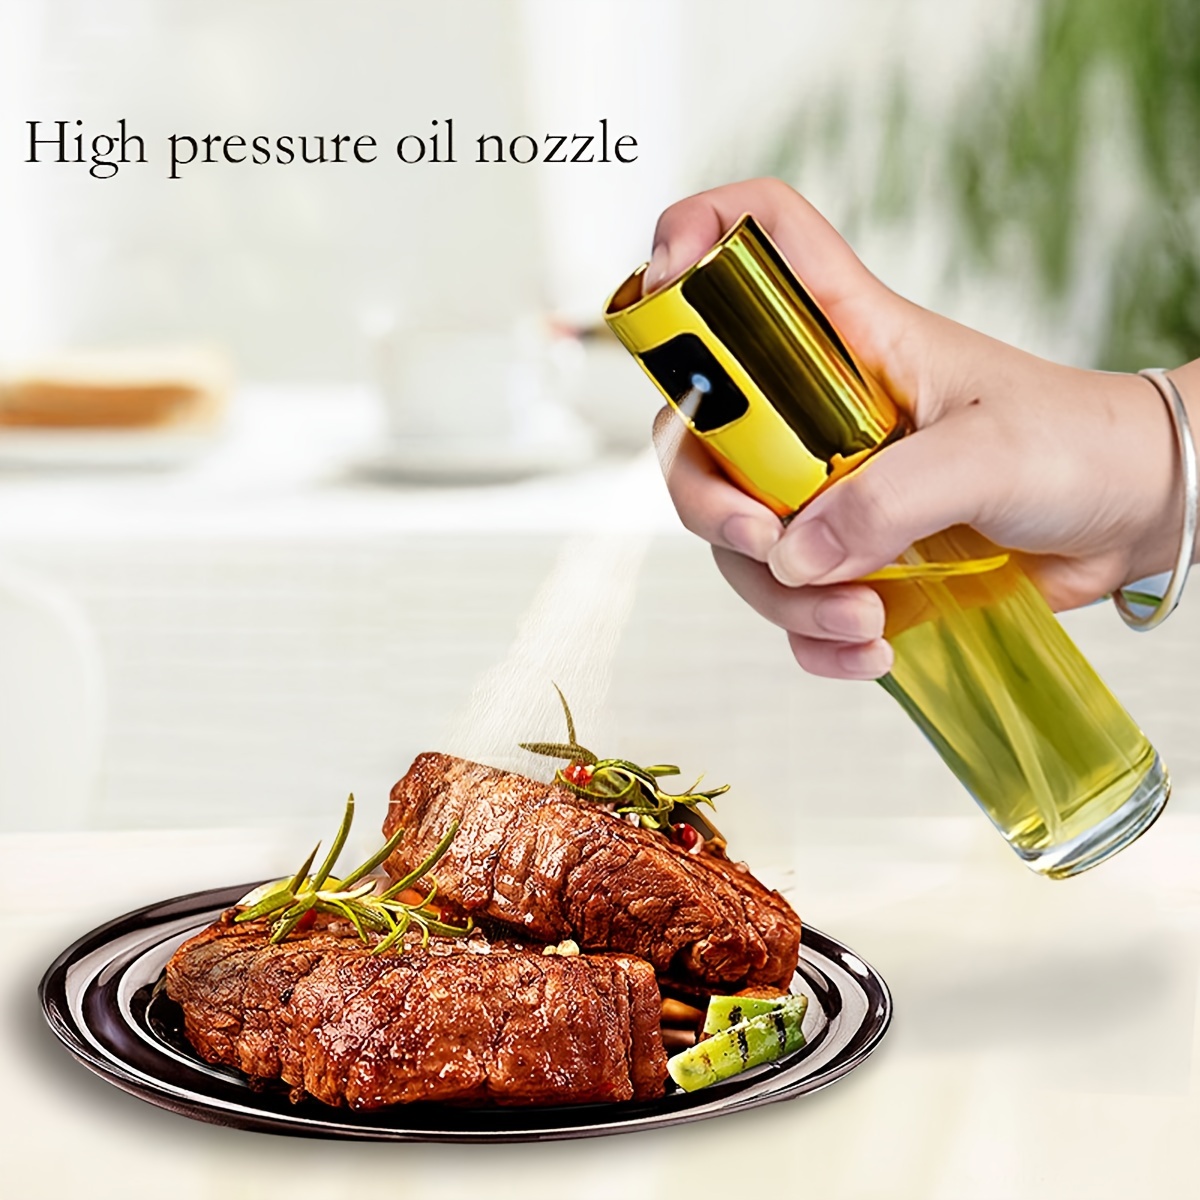 Aceite de condimento de vidrio para cocina, pulverizador de prensa de  aceite de oliva, rociador de aceite de cocina, botella de spray de aceite  para